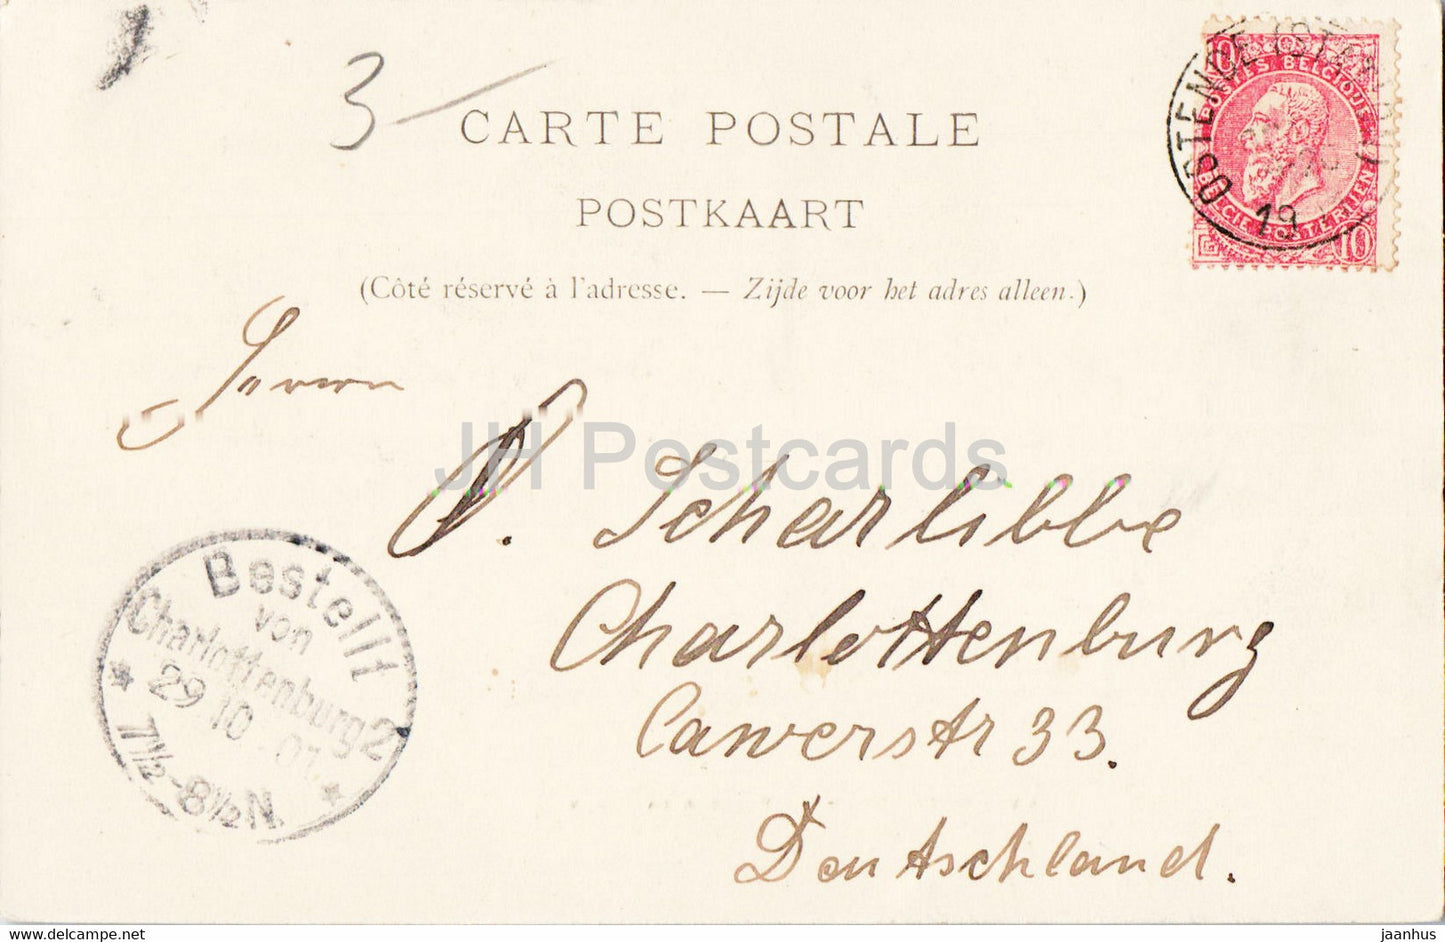 Ostende - Ostende - La Plage &amp; La Digue - 44 - carte postale ancienne - 1901 - Belgique - occasion